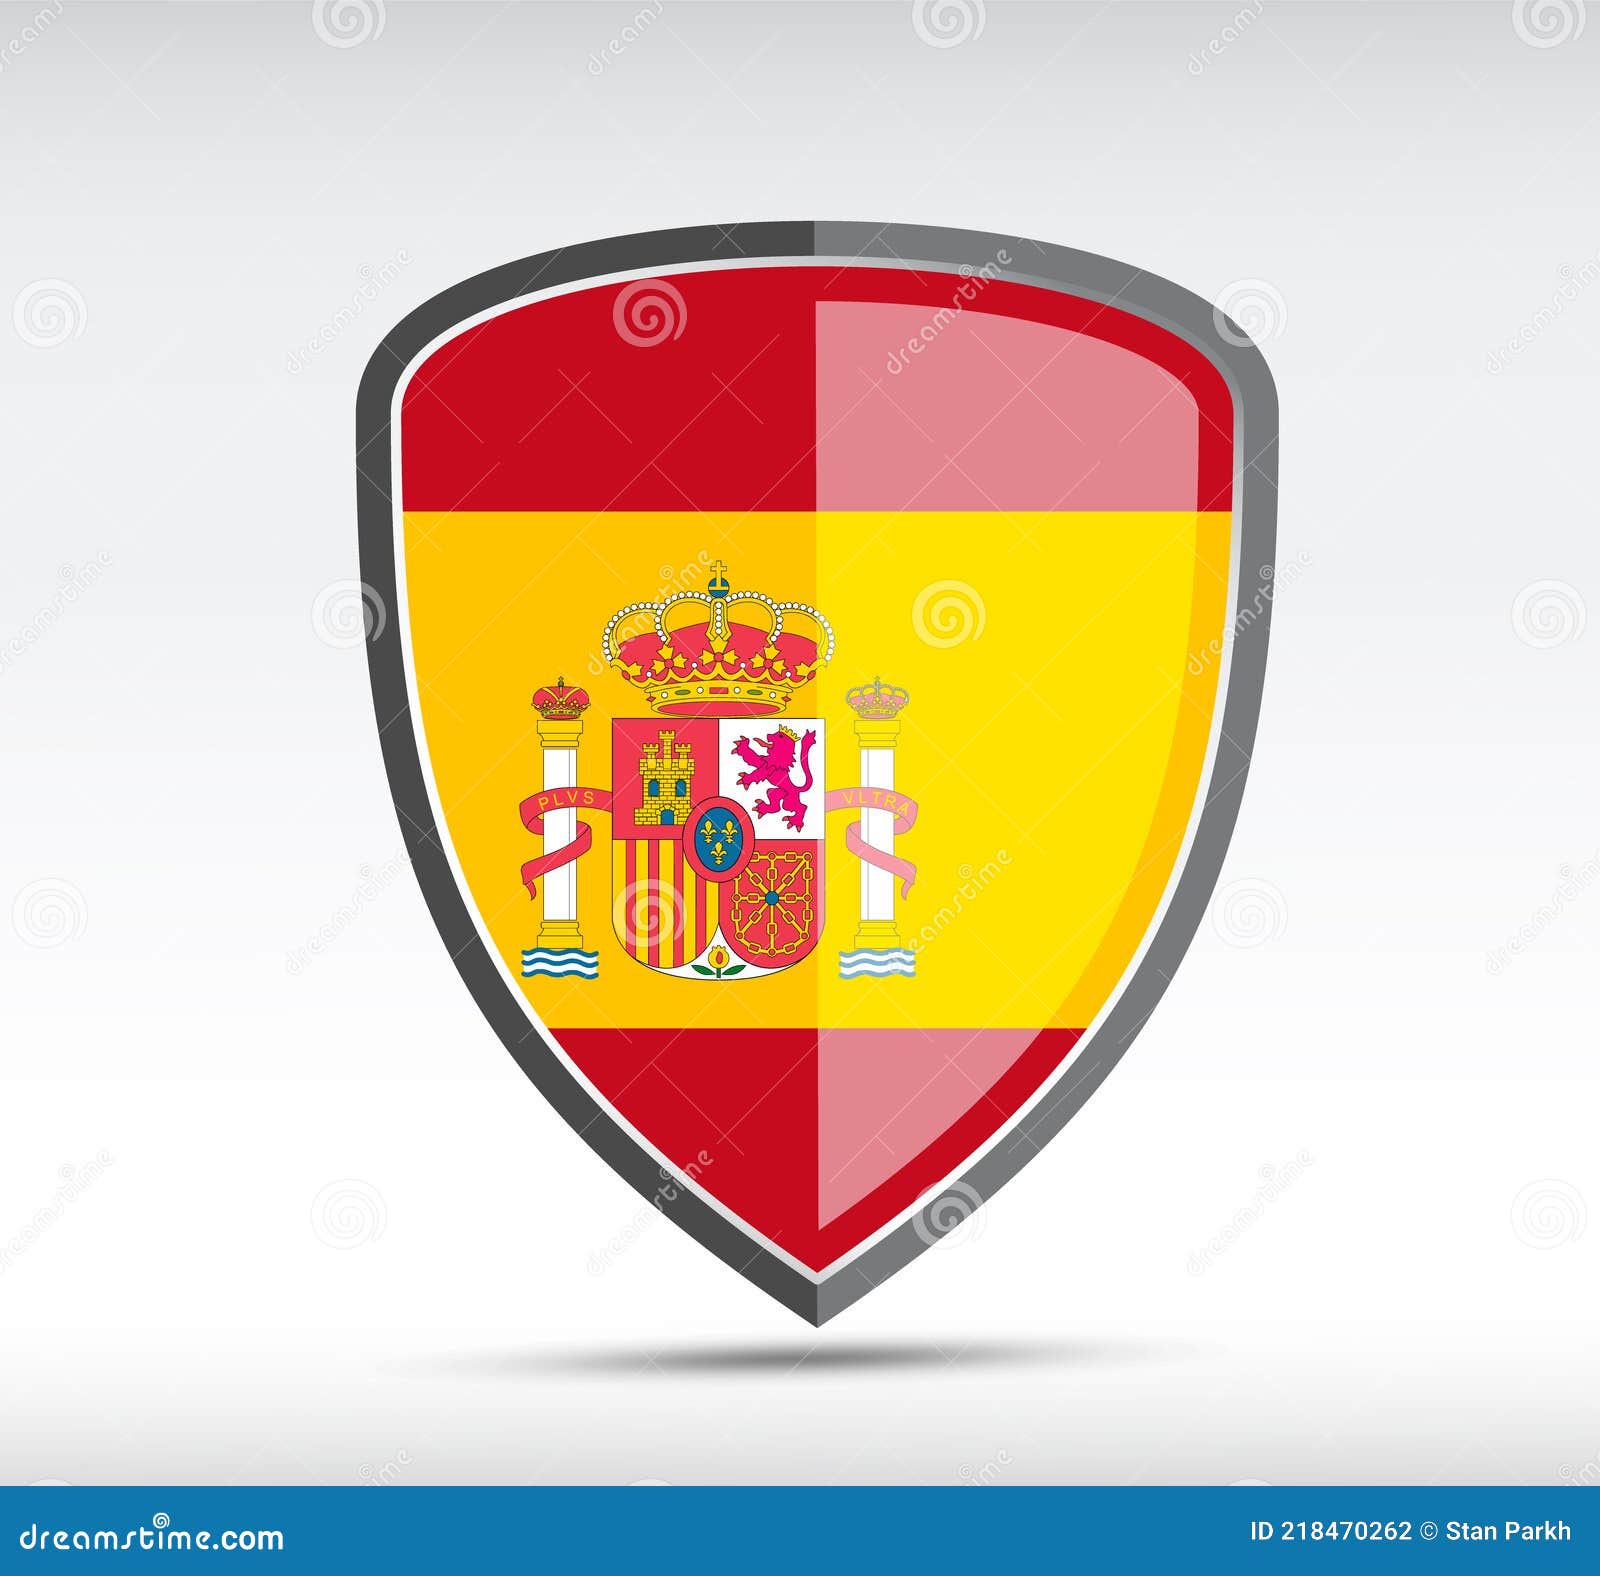 西班牙元素图标素材 12 Spain line icons - 云瑞设计